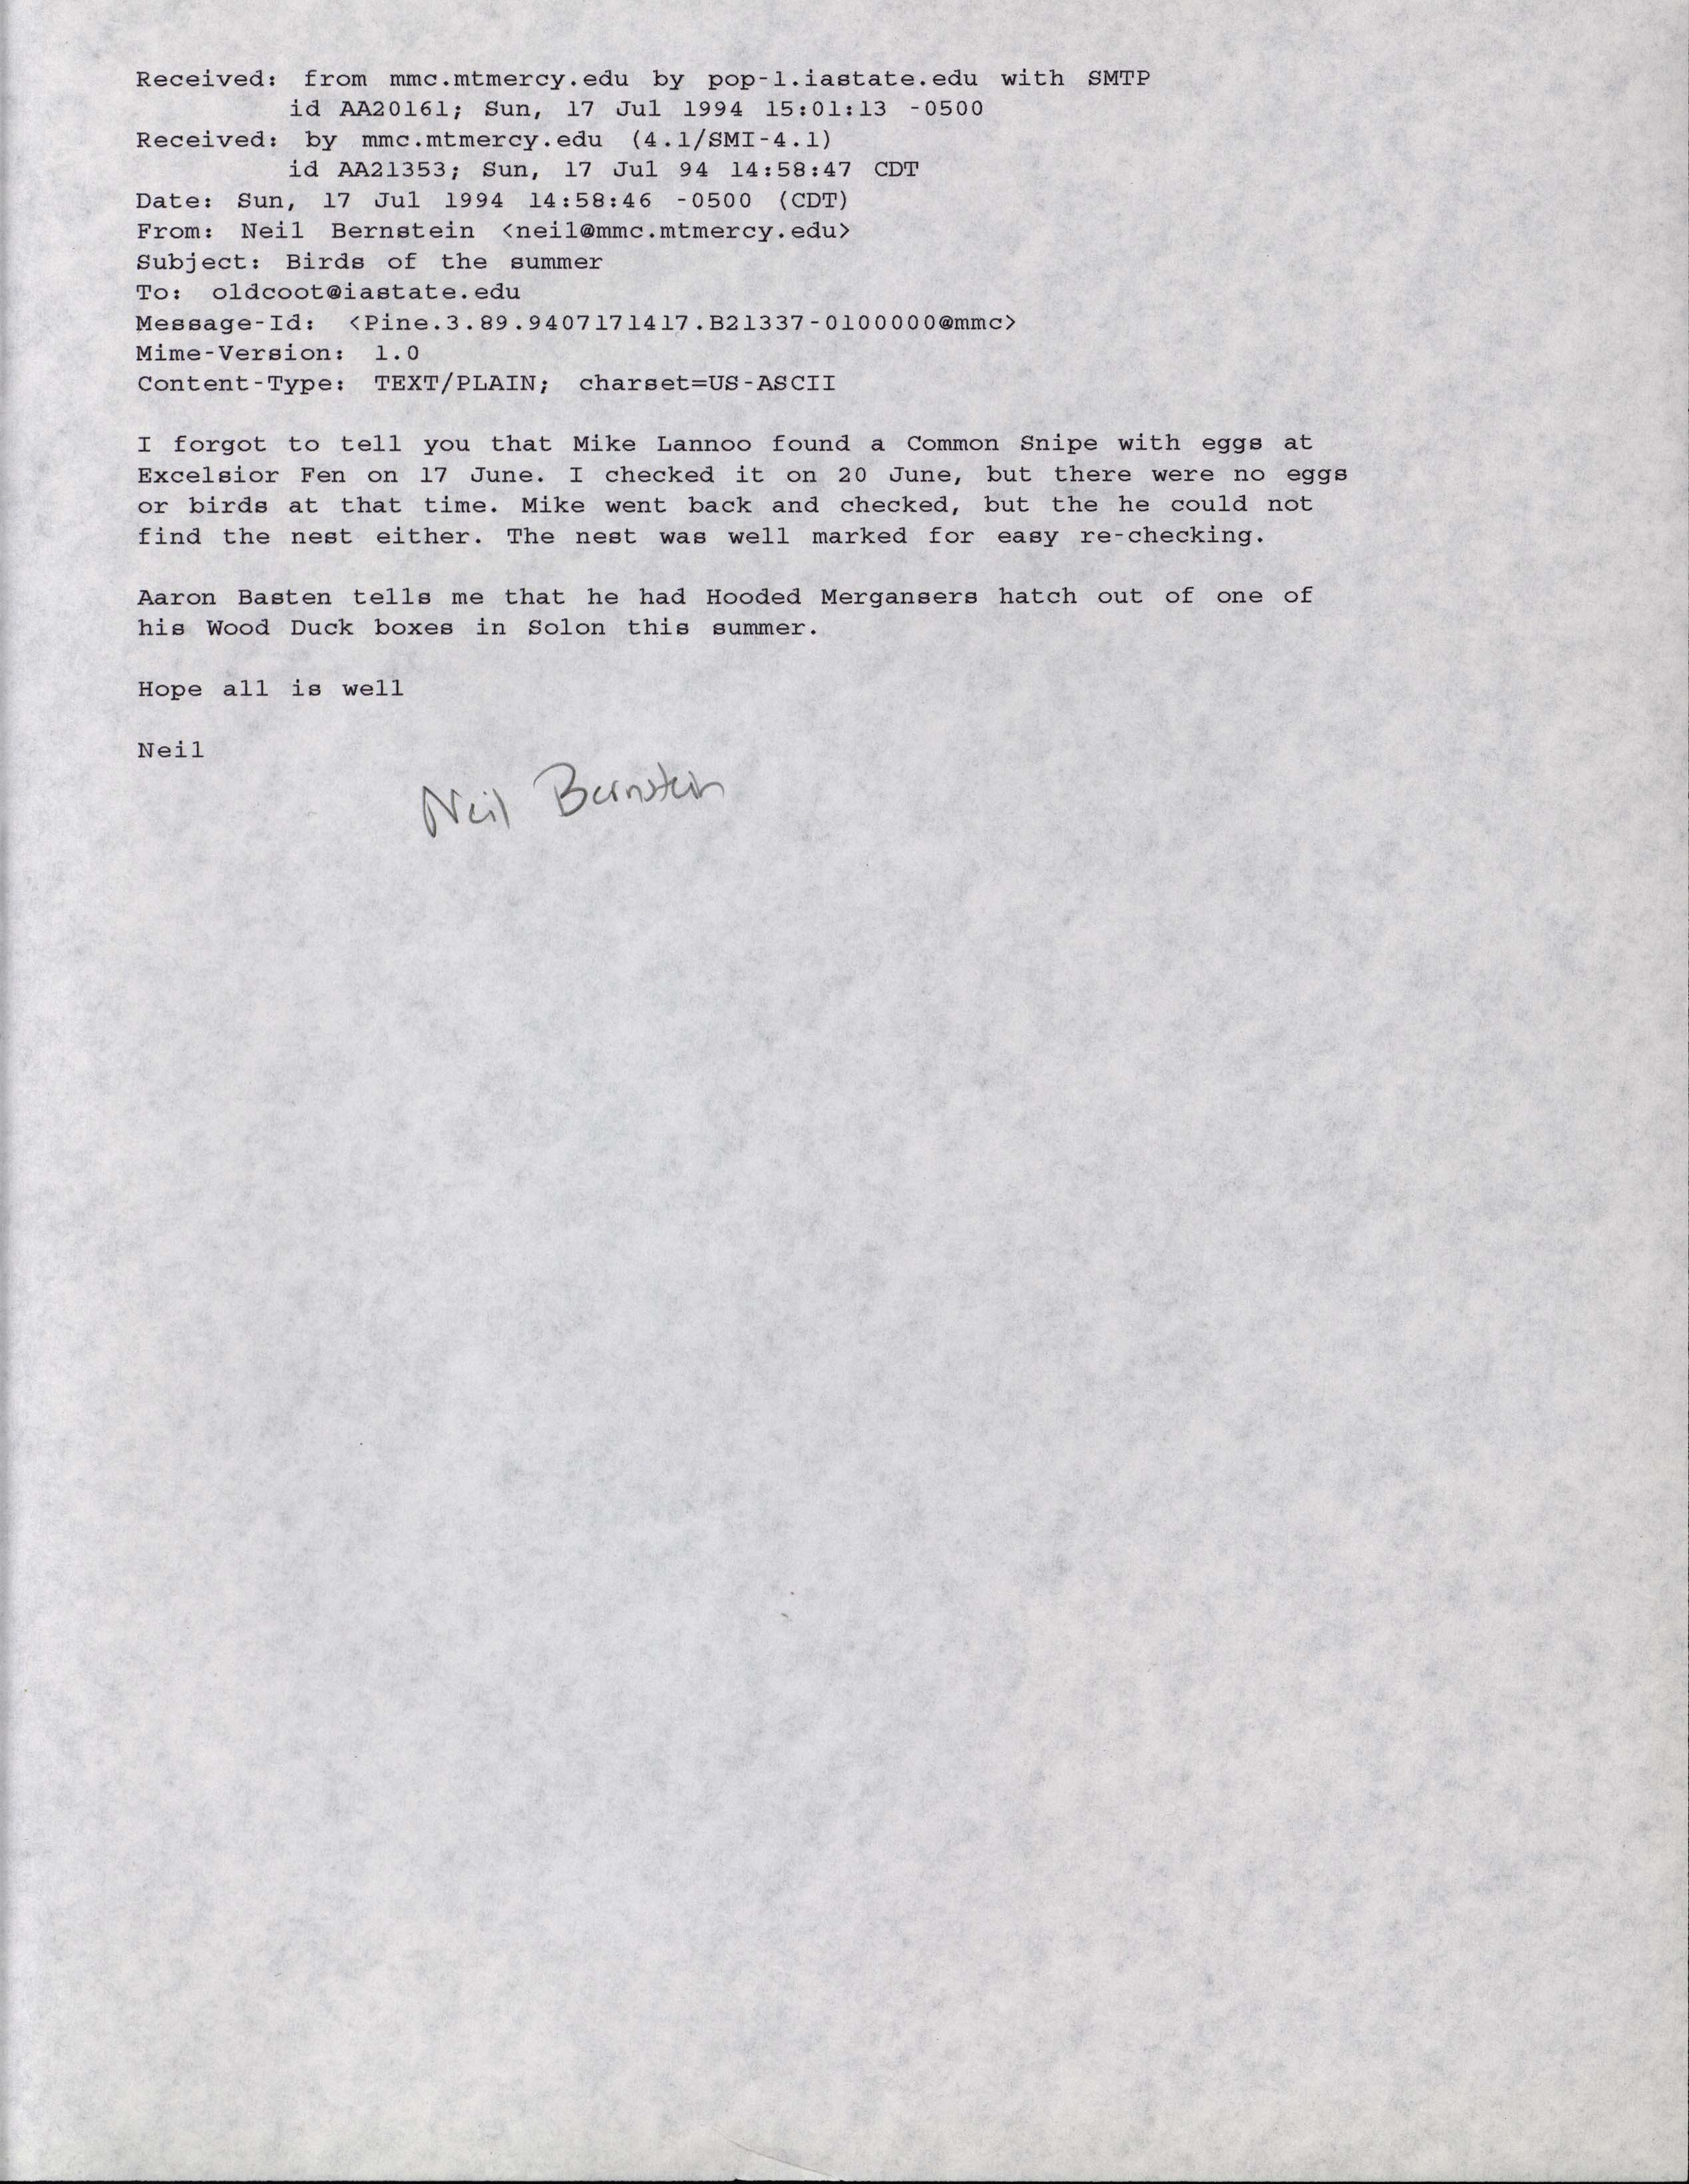 Neil Bernstein email to Jim Dinsmore regarding Common Snipe nest, July 17, 1994